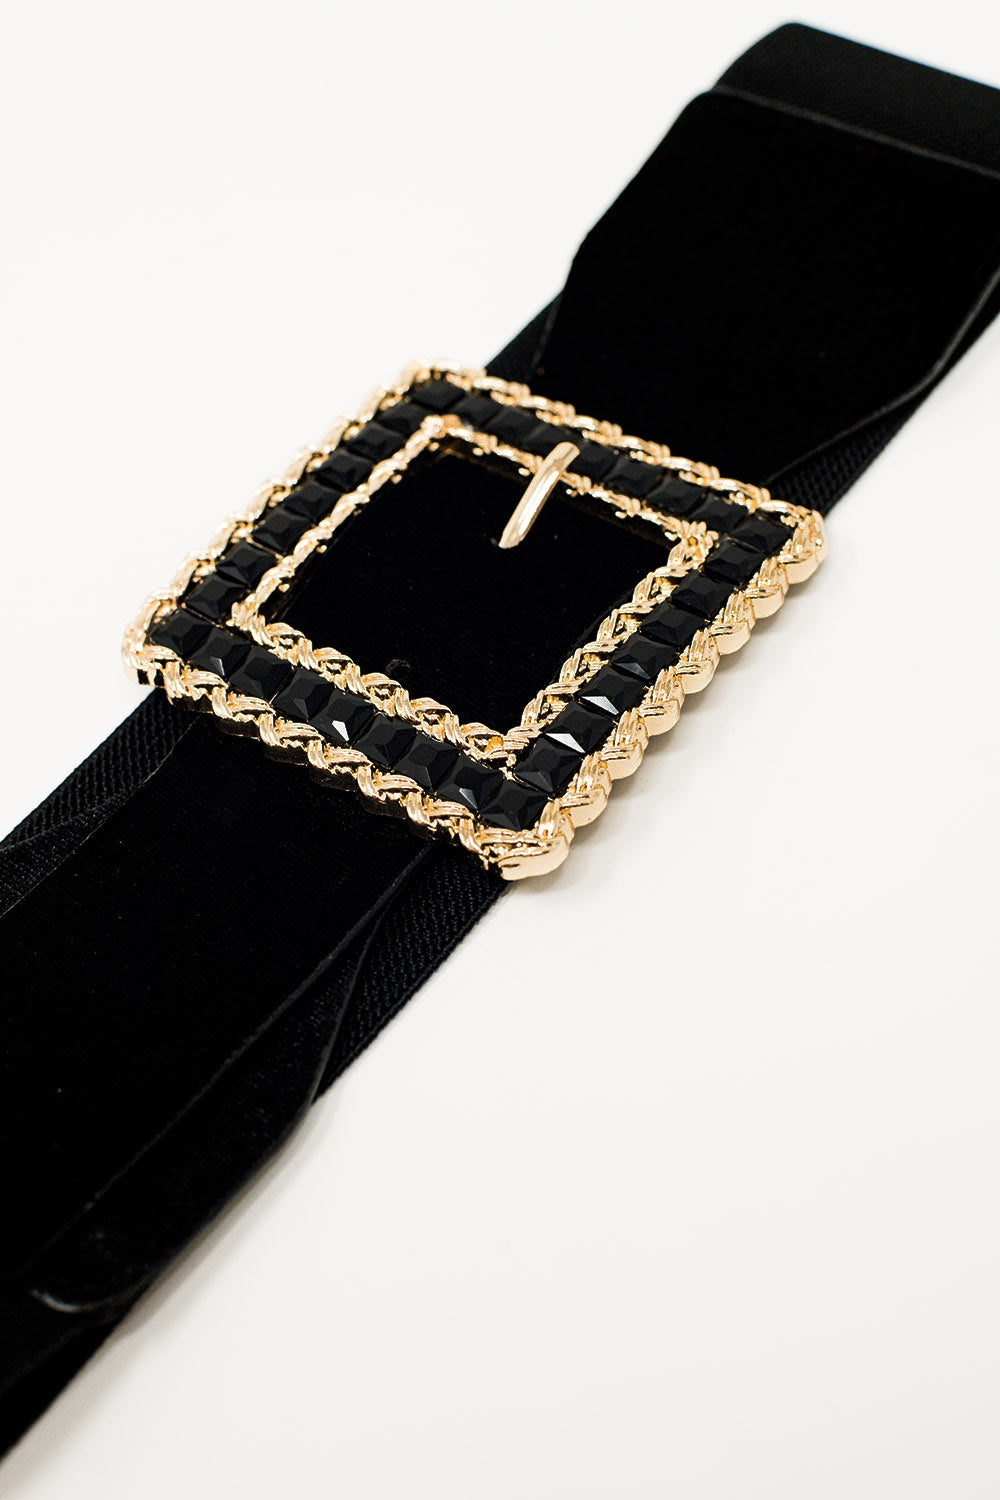 Square black belt with rhinestones and adjustable elastic - Szua Store